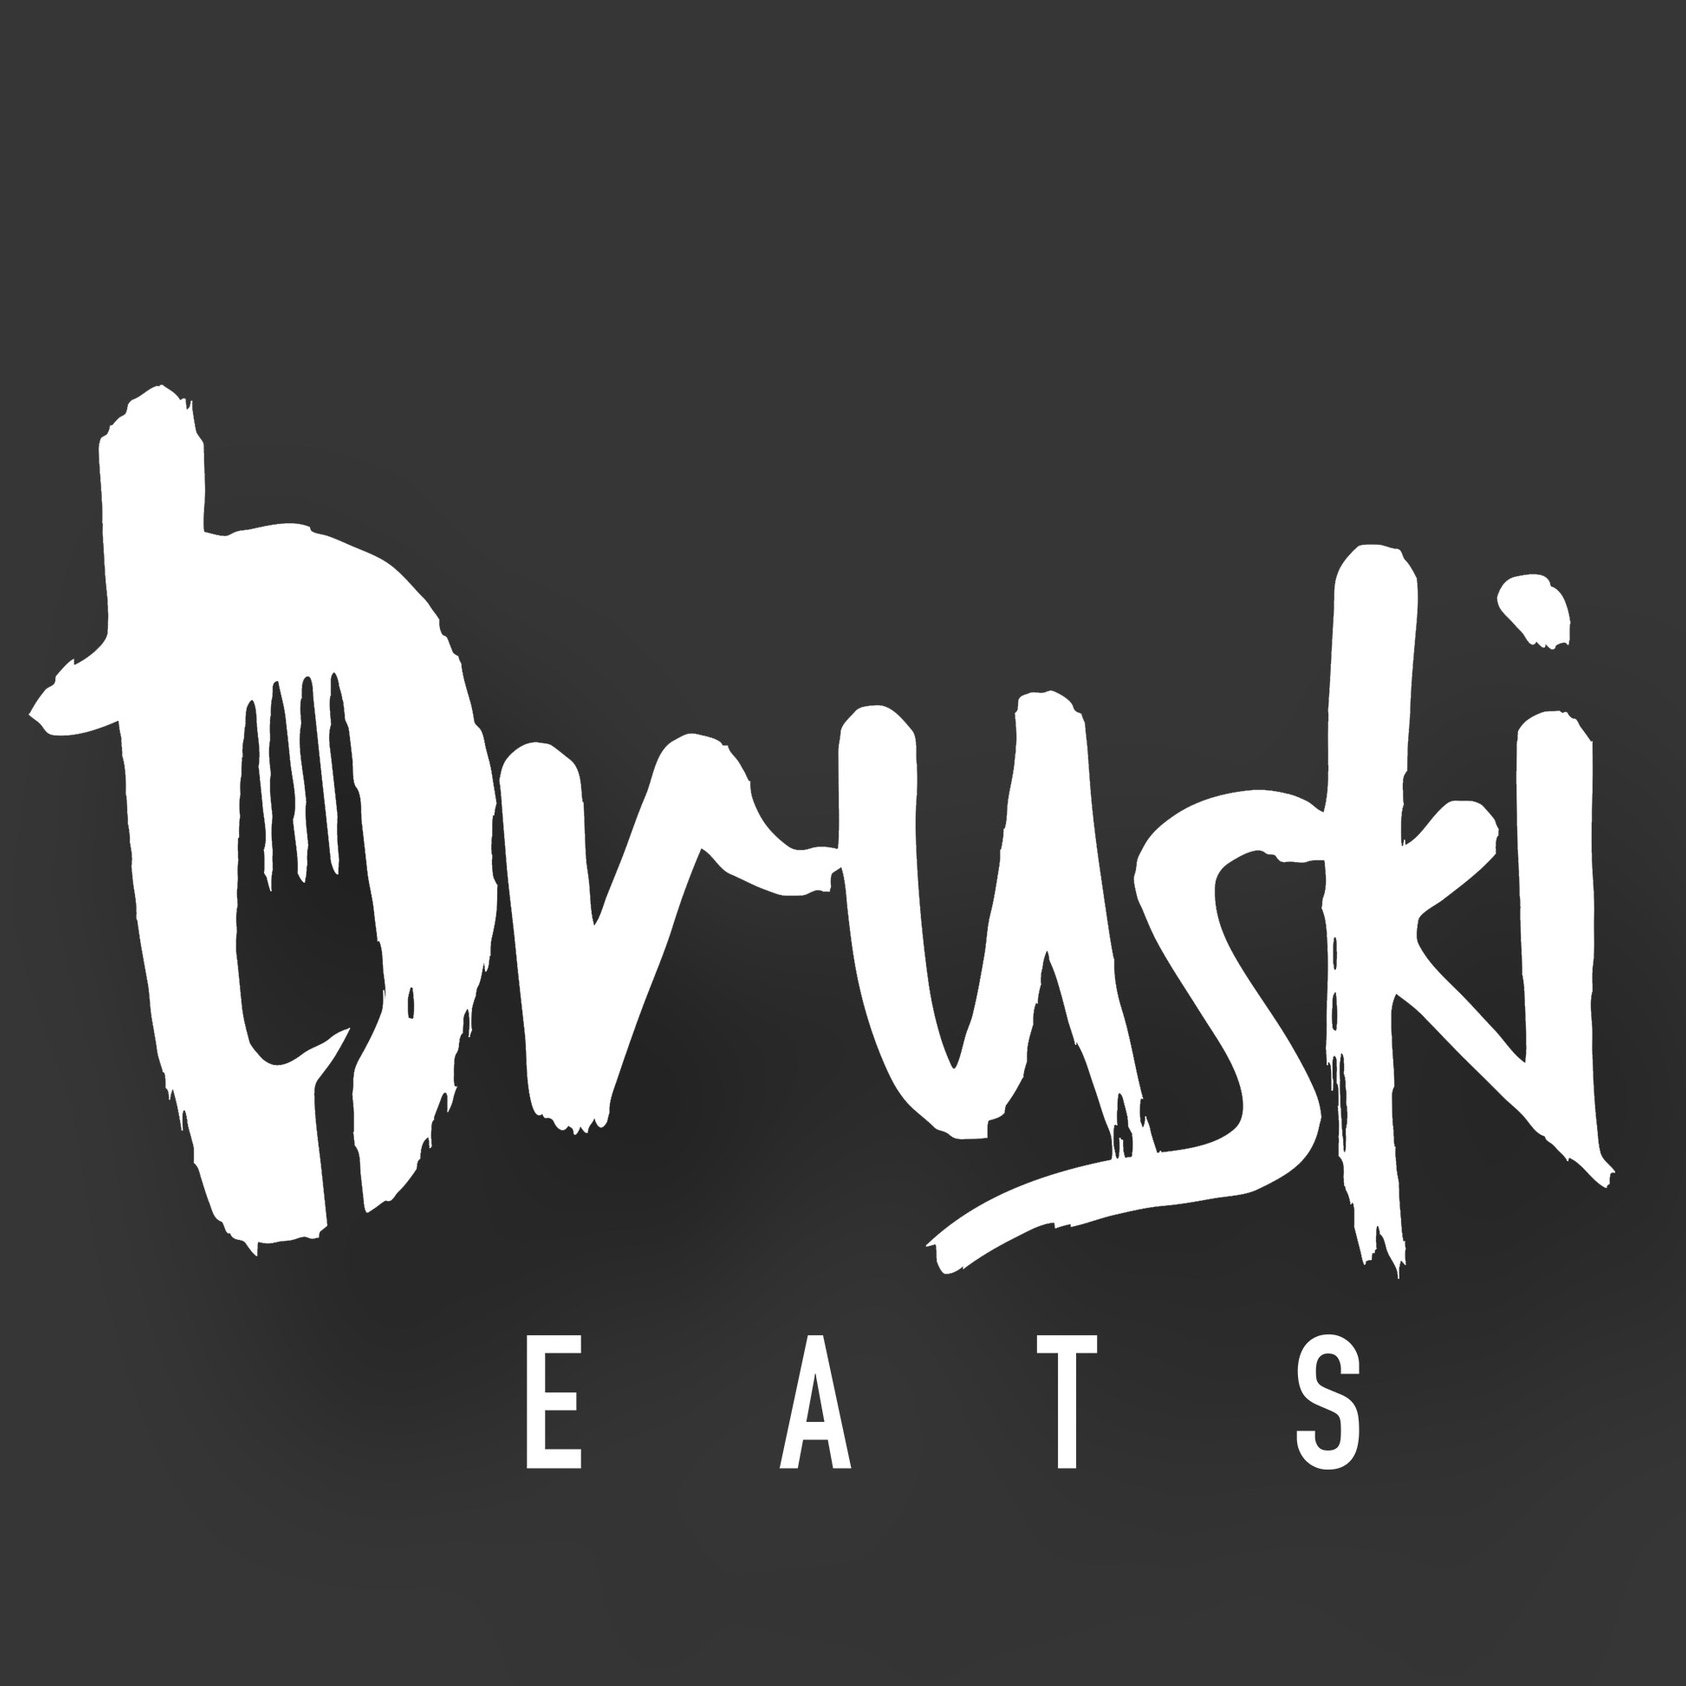 WNY (Western New York) Food Connoisseur ⚪ #716 #BuffaloFood ⚪ Have a seat as Druski Eats